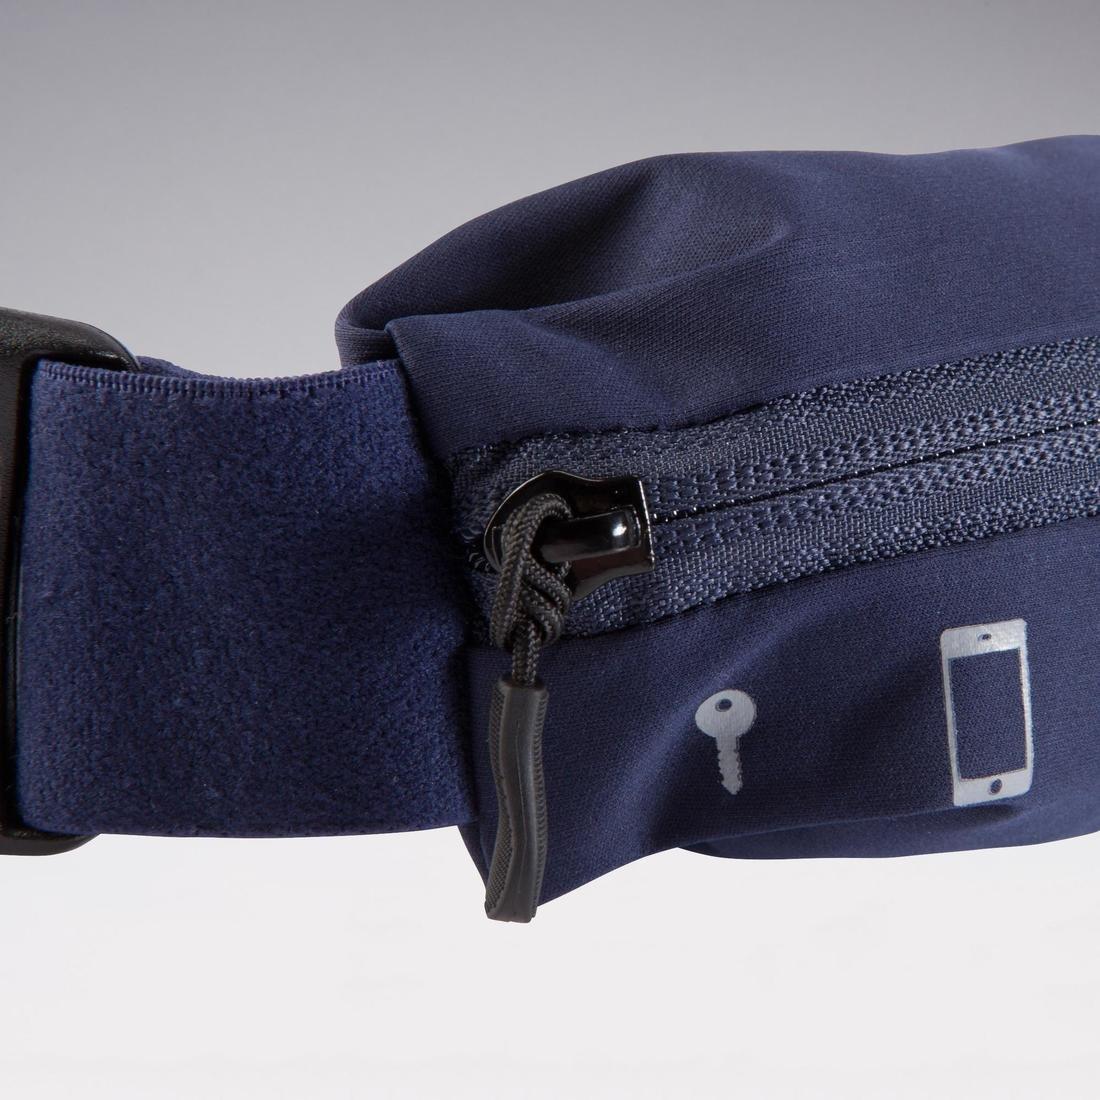 KALENJI - Adjustable Running Belt For Phone, Grey